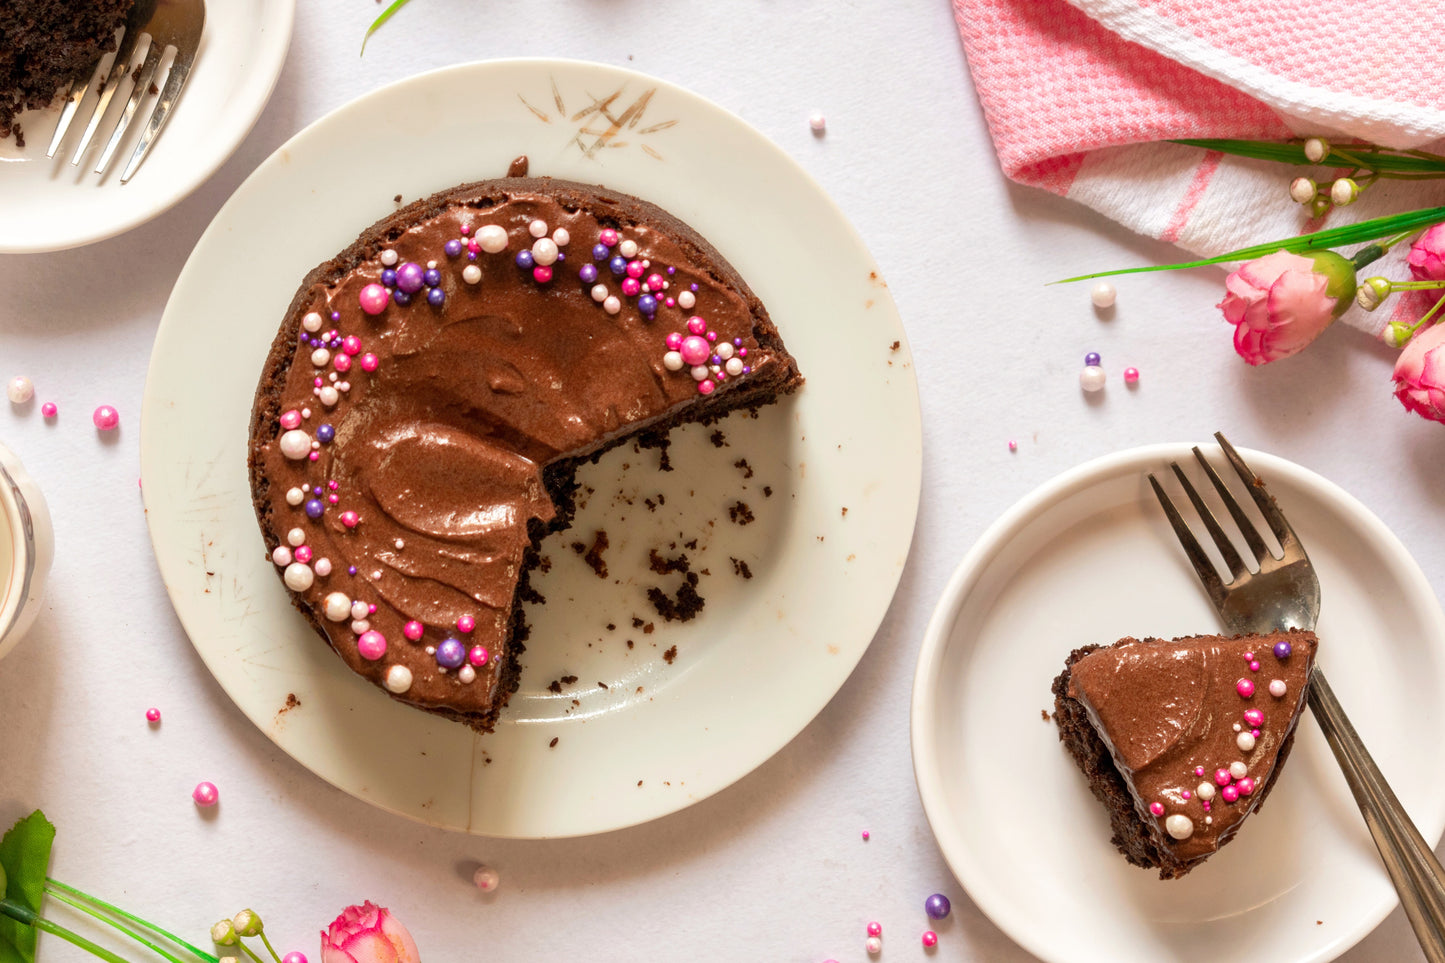 Oats & Nuts, Vanilla and Chocolate Jaggery Cake Mix